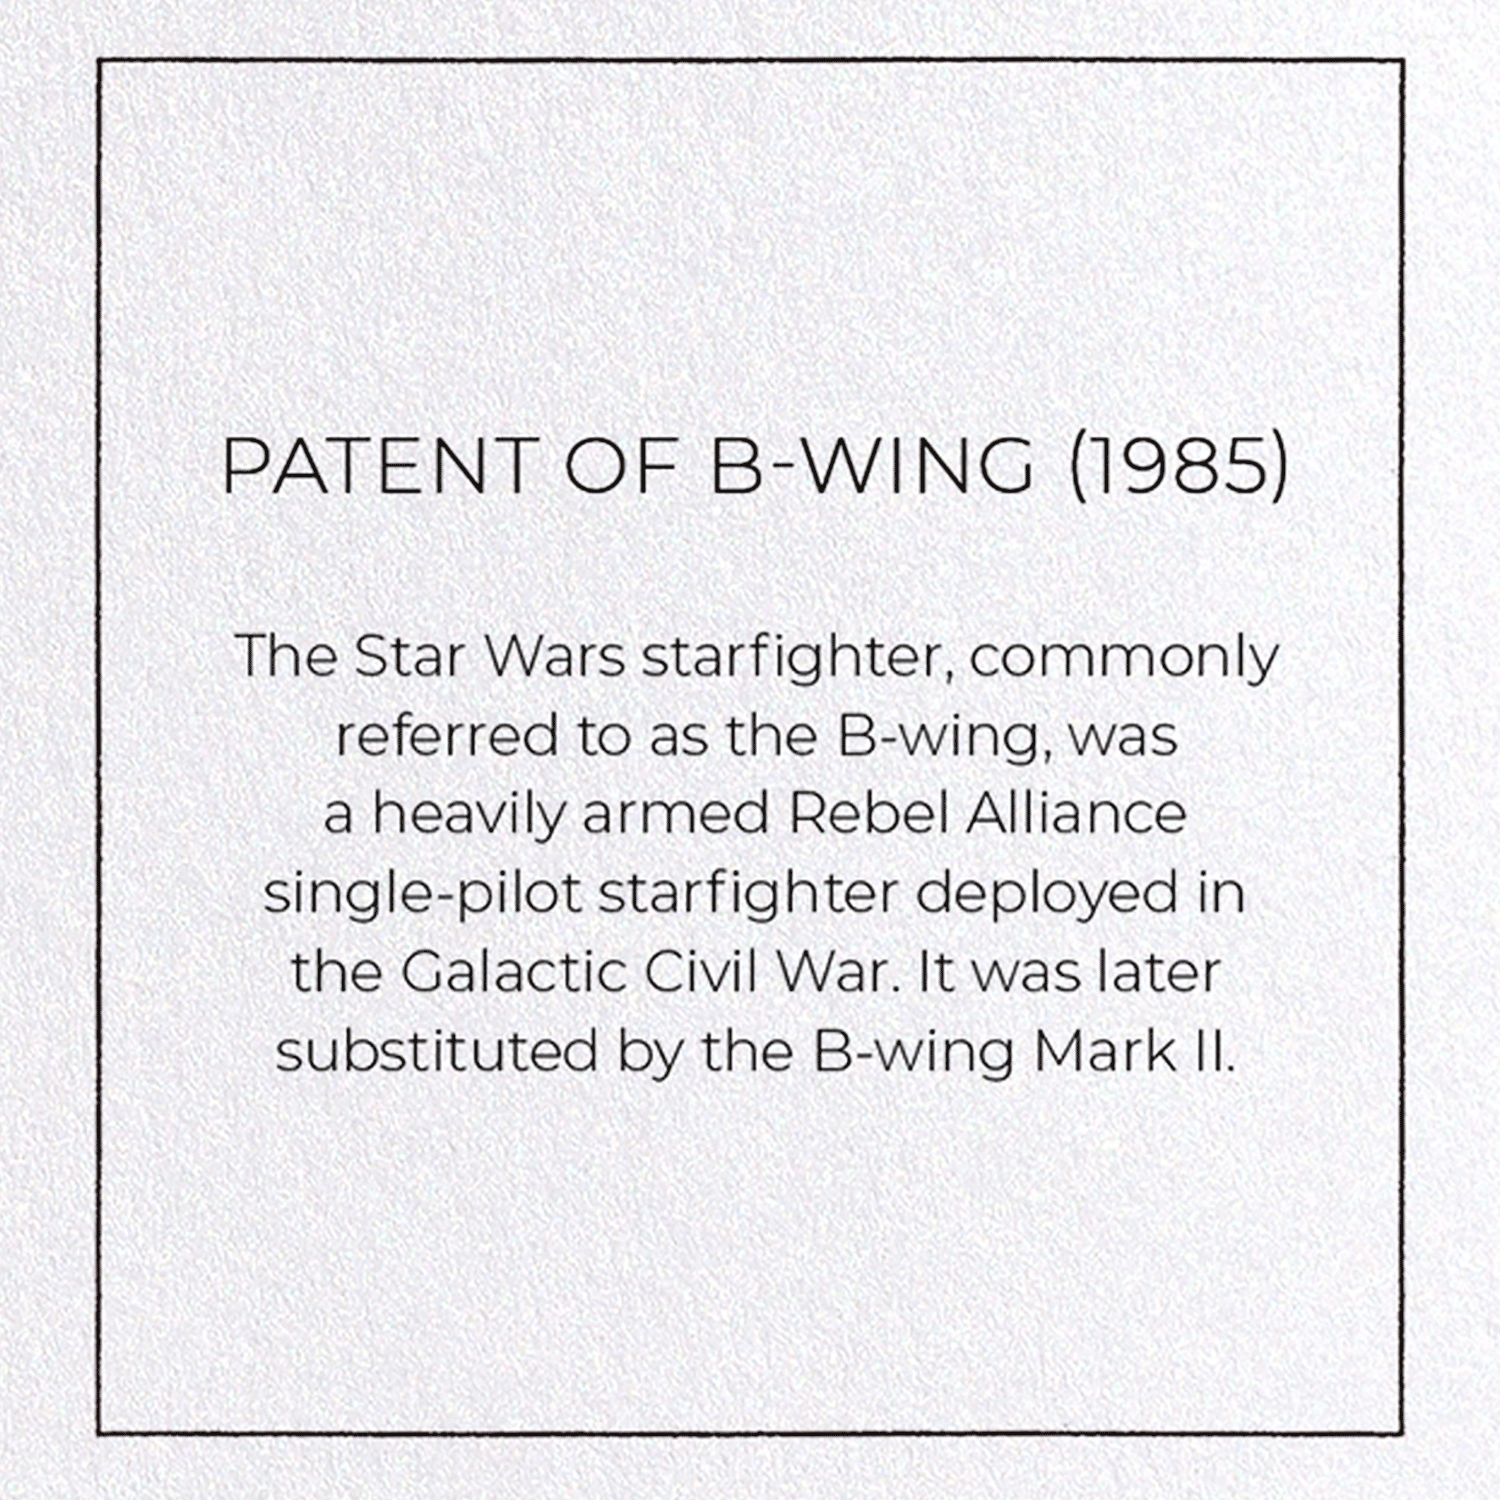 PATENT OF B-WING (1985)